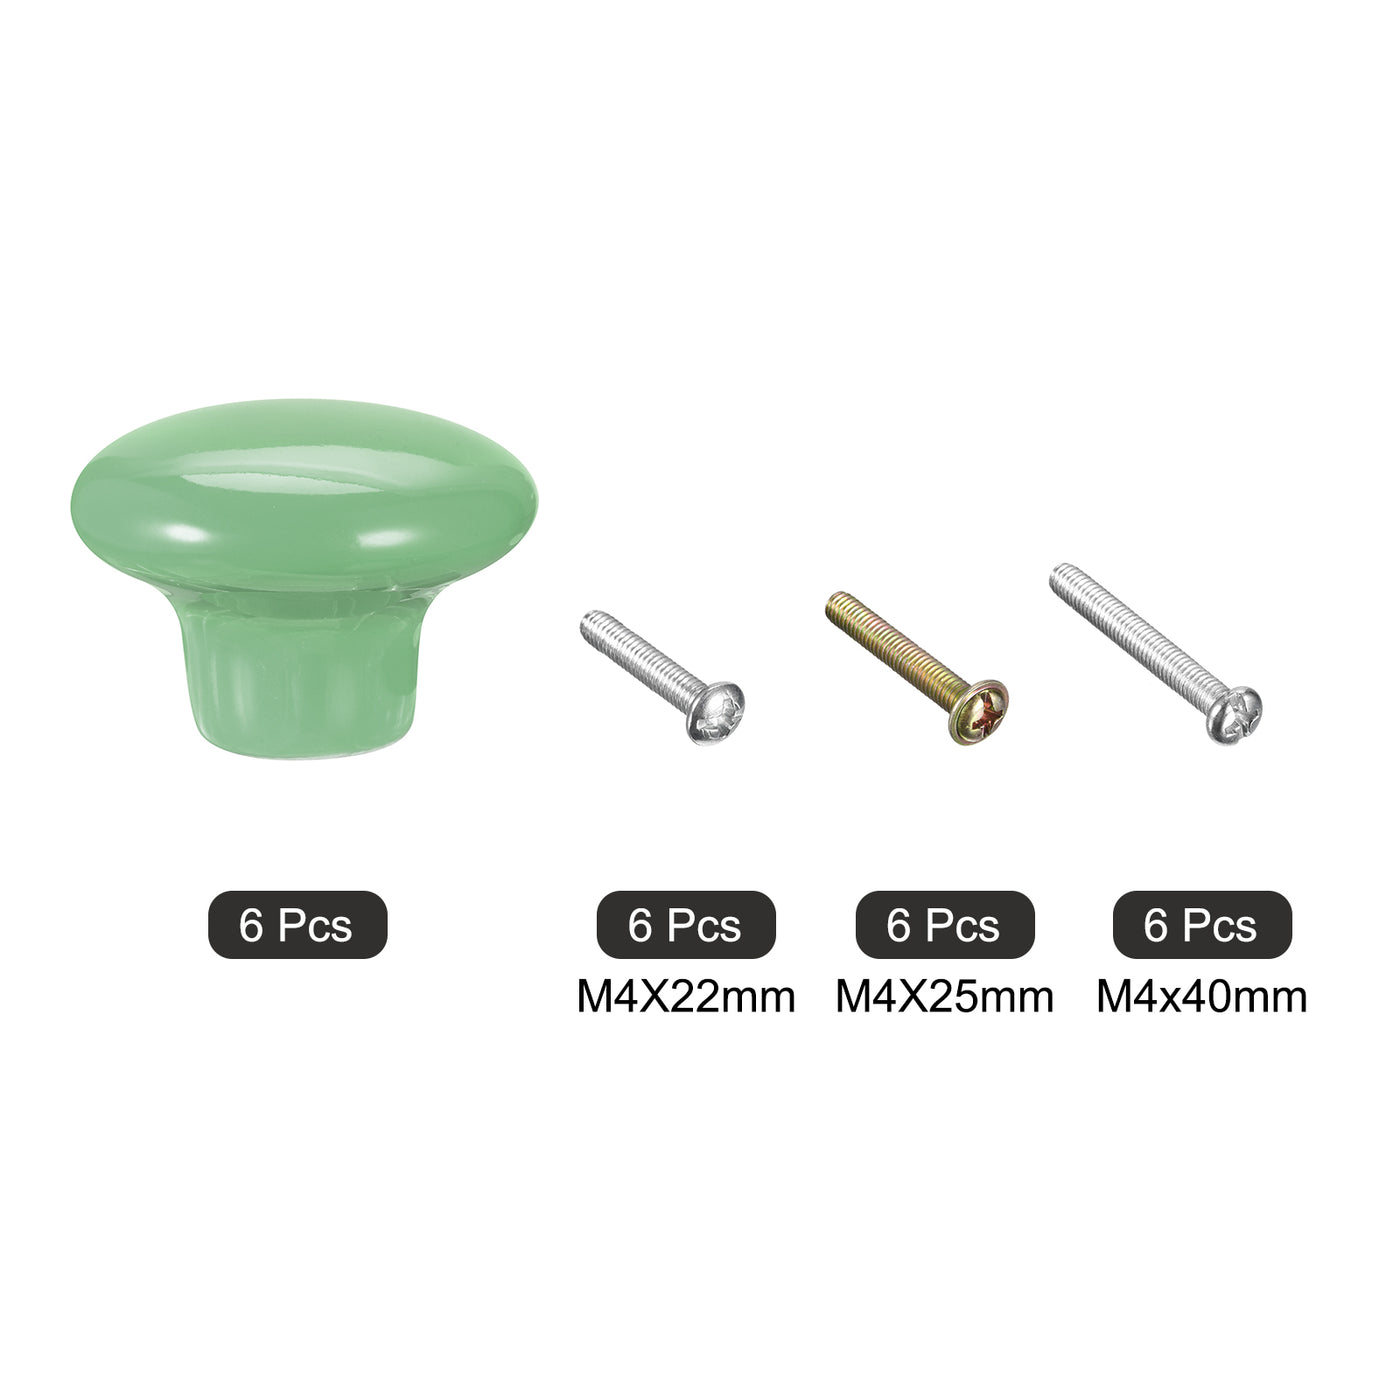 uxcell Uxcell Ceramic Drawer Knobs 6pcs Mushroom Shape Pulls 1.1"x1.5" for Dresser(Green)